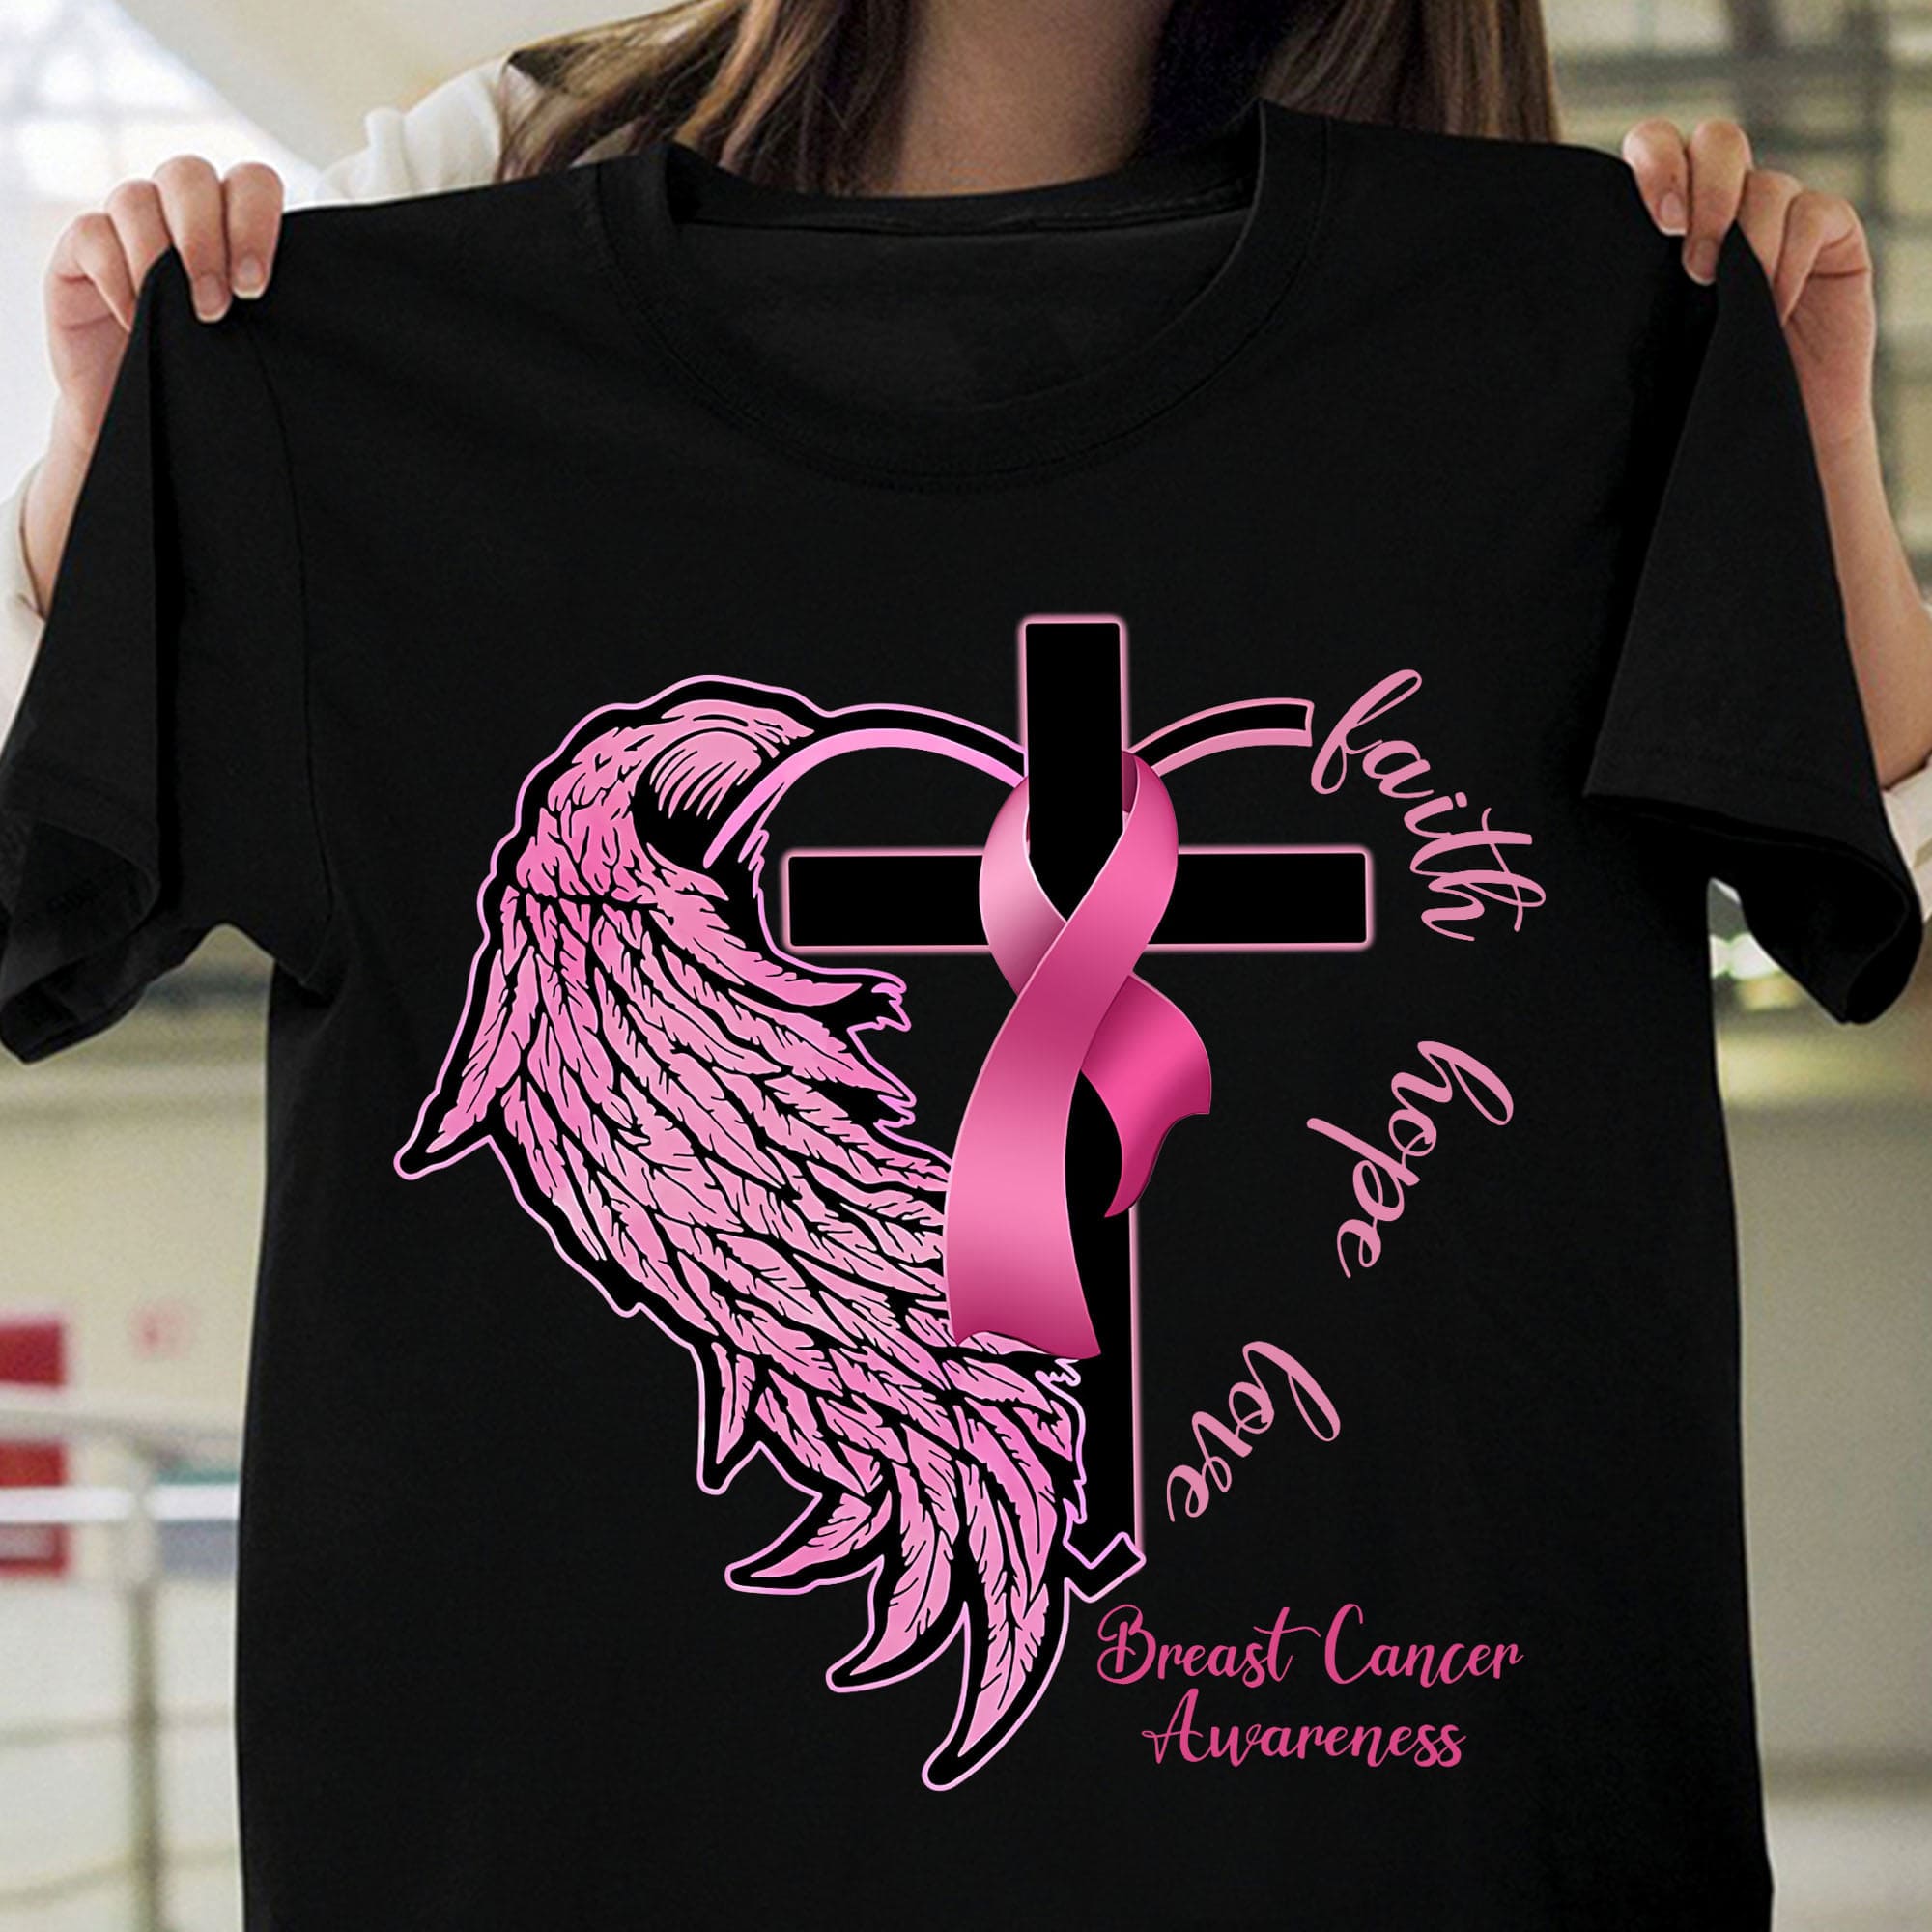 Faith hope love - Breast cancer awareness, Jesus cross, God always bless